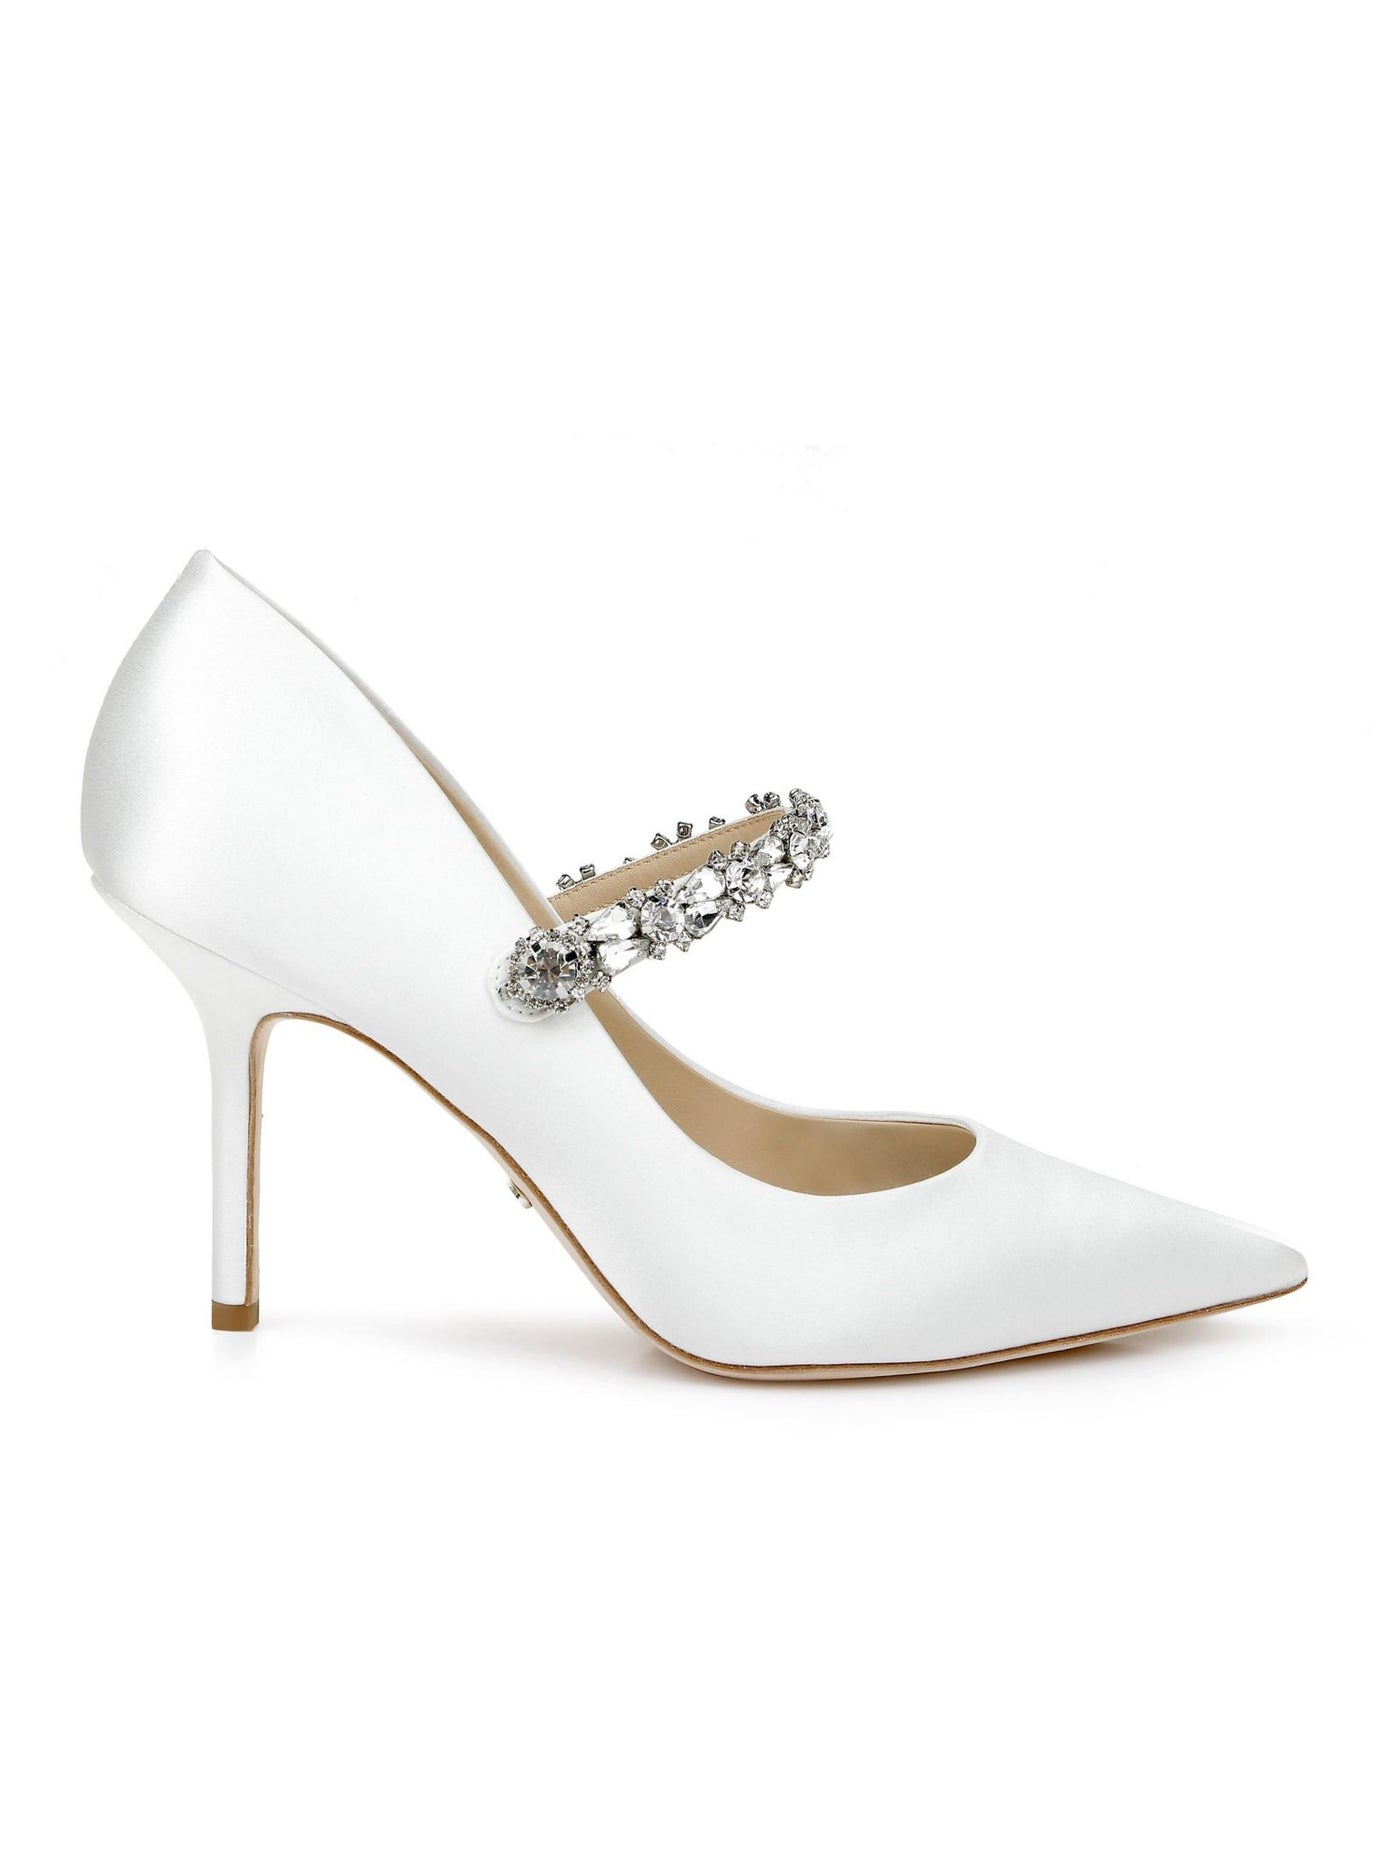 BADGLEY MISCHKA Womens White Padded Embellished Theory Peep Toe Stiletto Slip On Dress Pumps Shoes 9.5